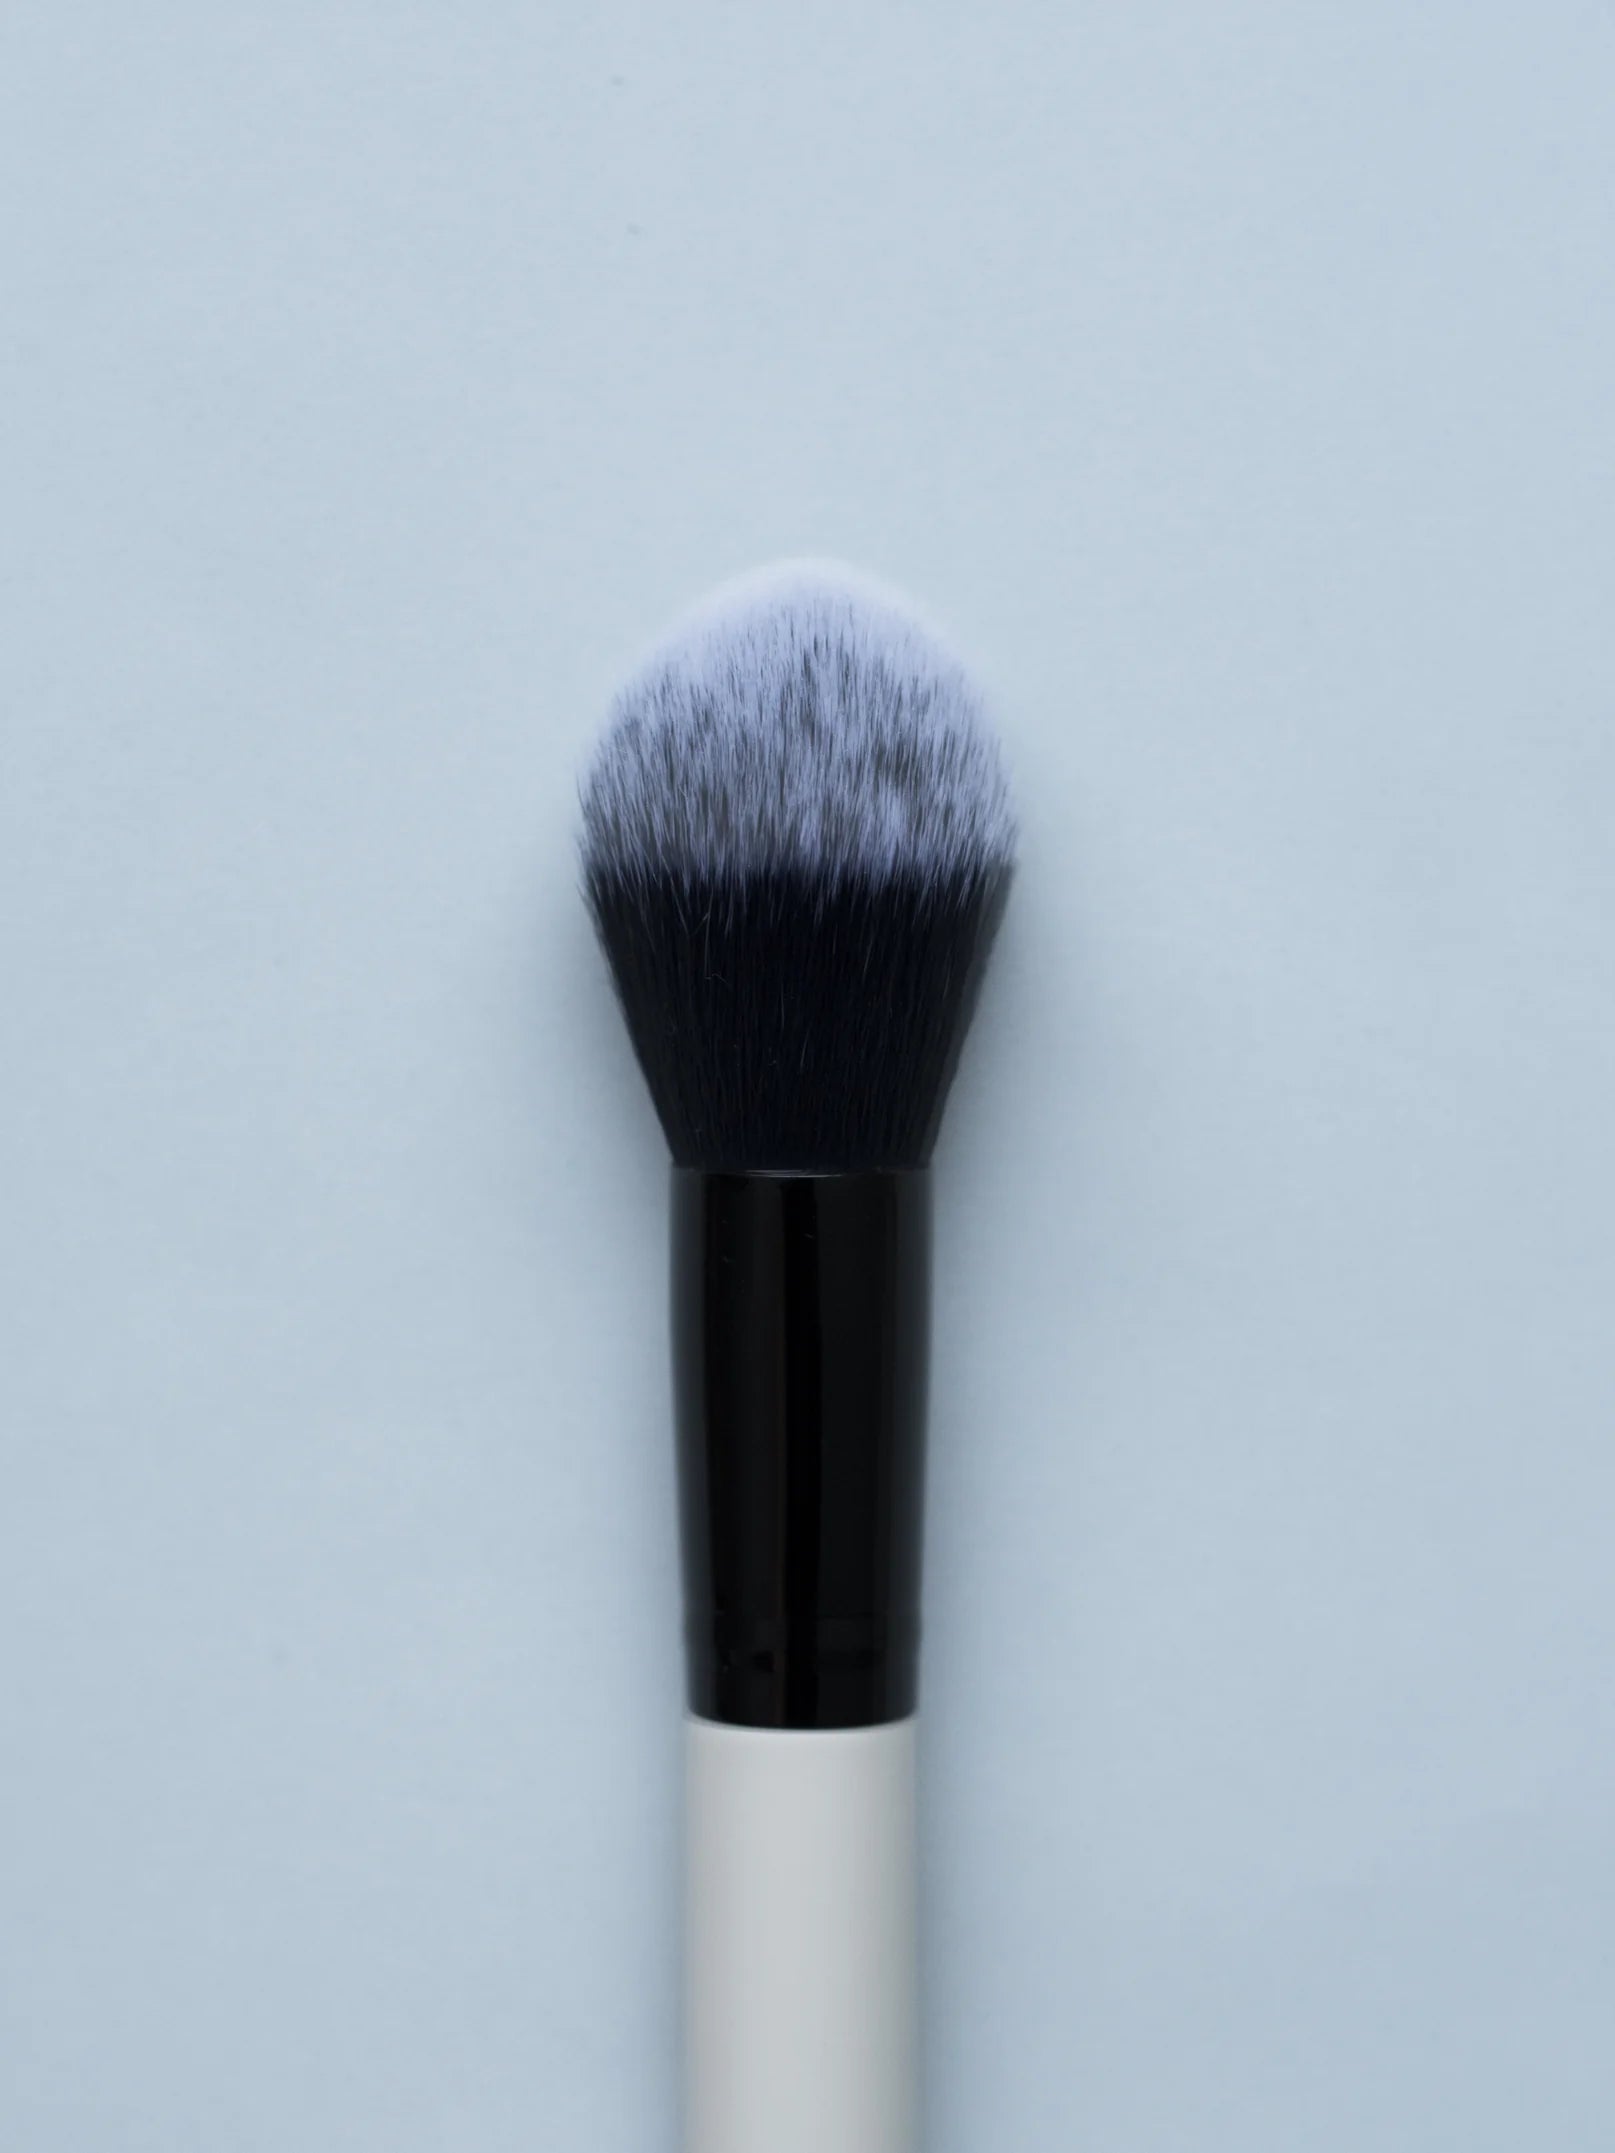 Tapered Face Brush 10 Make-up Brush EDY LONDON    - EDY LONDON PRODUCTS UK - The Best Makeup Brushes - shop.edy.london